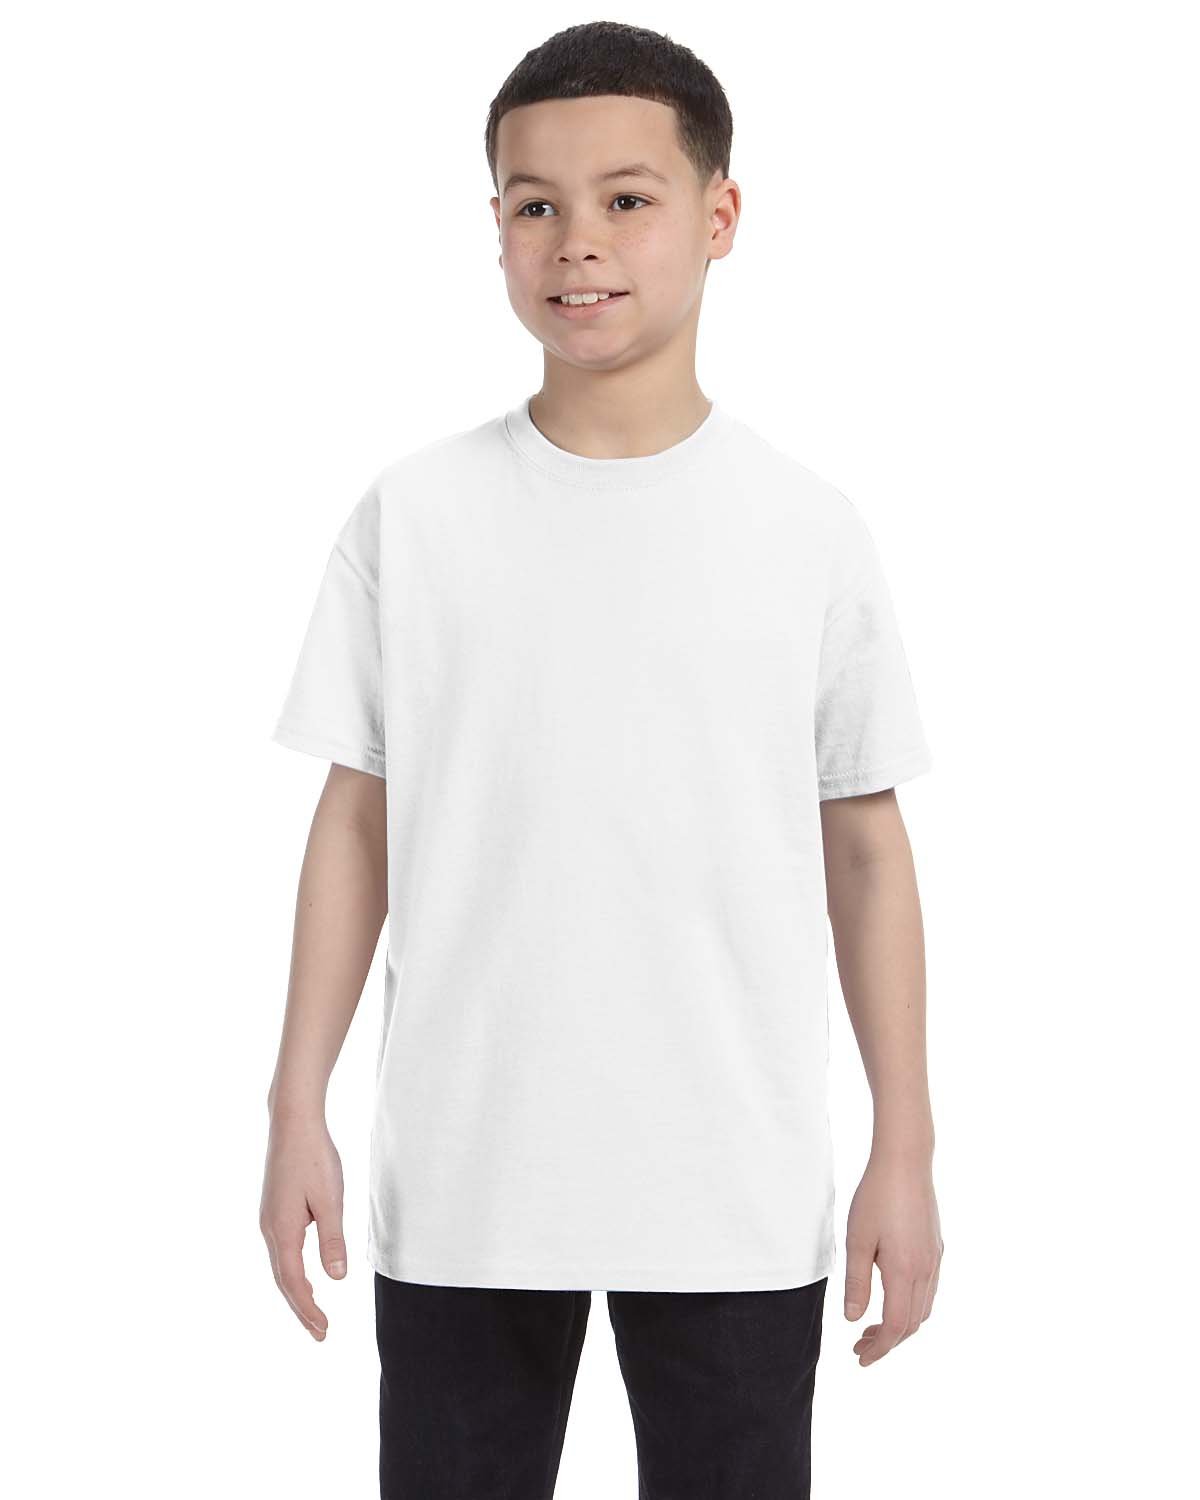 Gildan Unisex Youth T-Shirt - black, xs/4-5 (Little Girls)